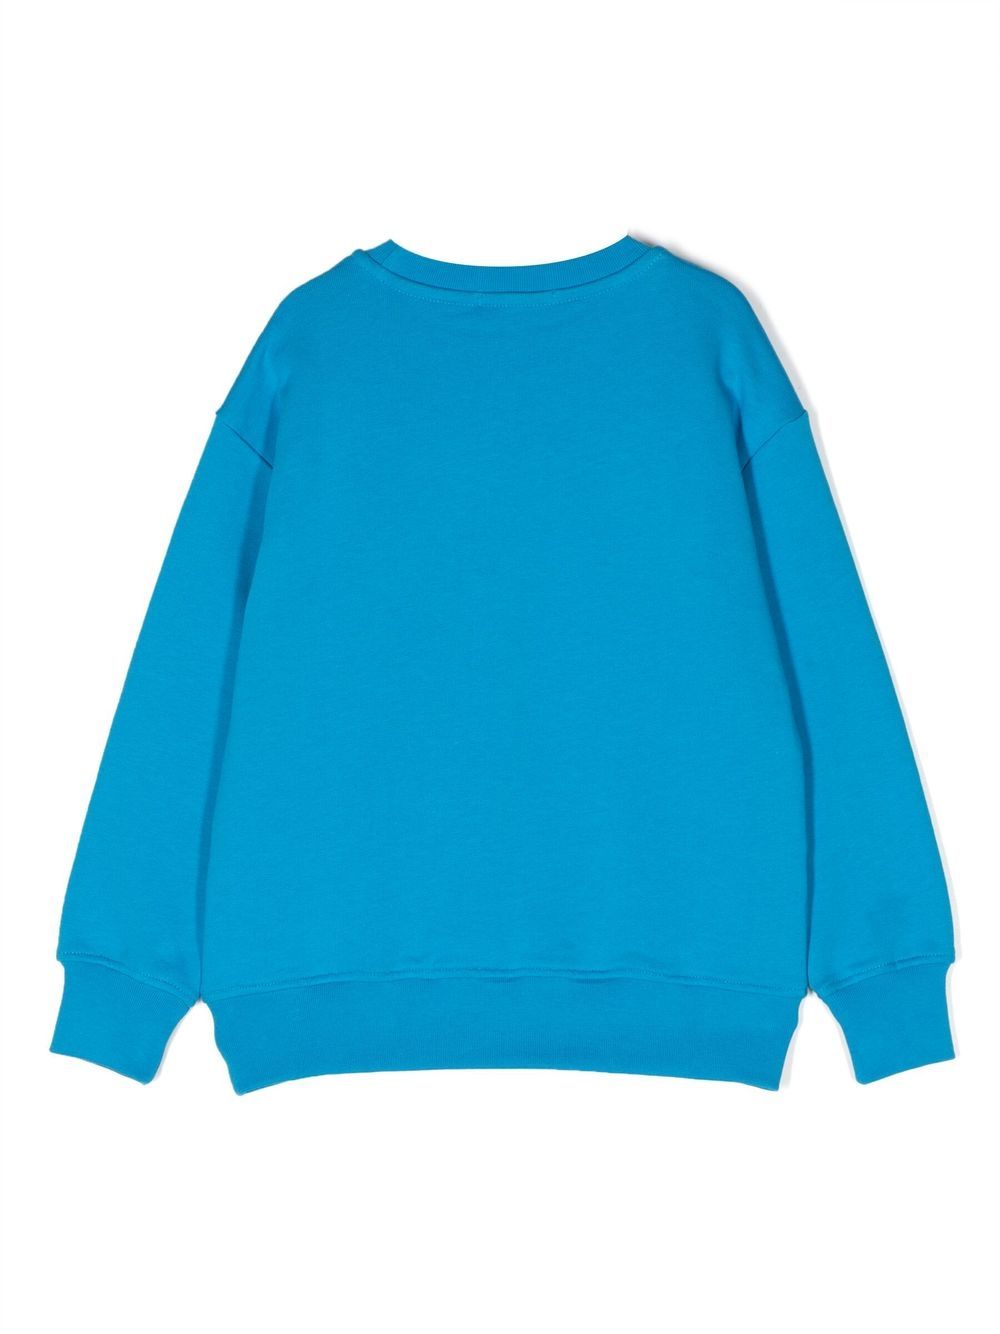 Turquoise sweatshirt for children with logo